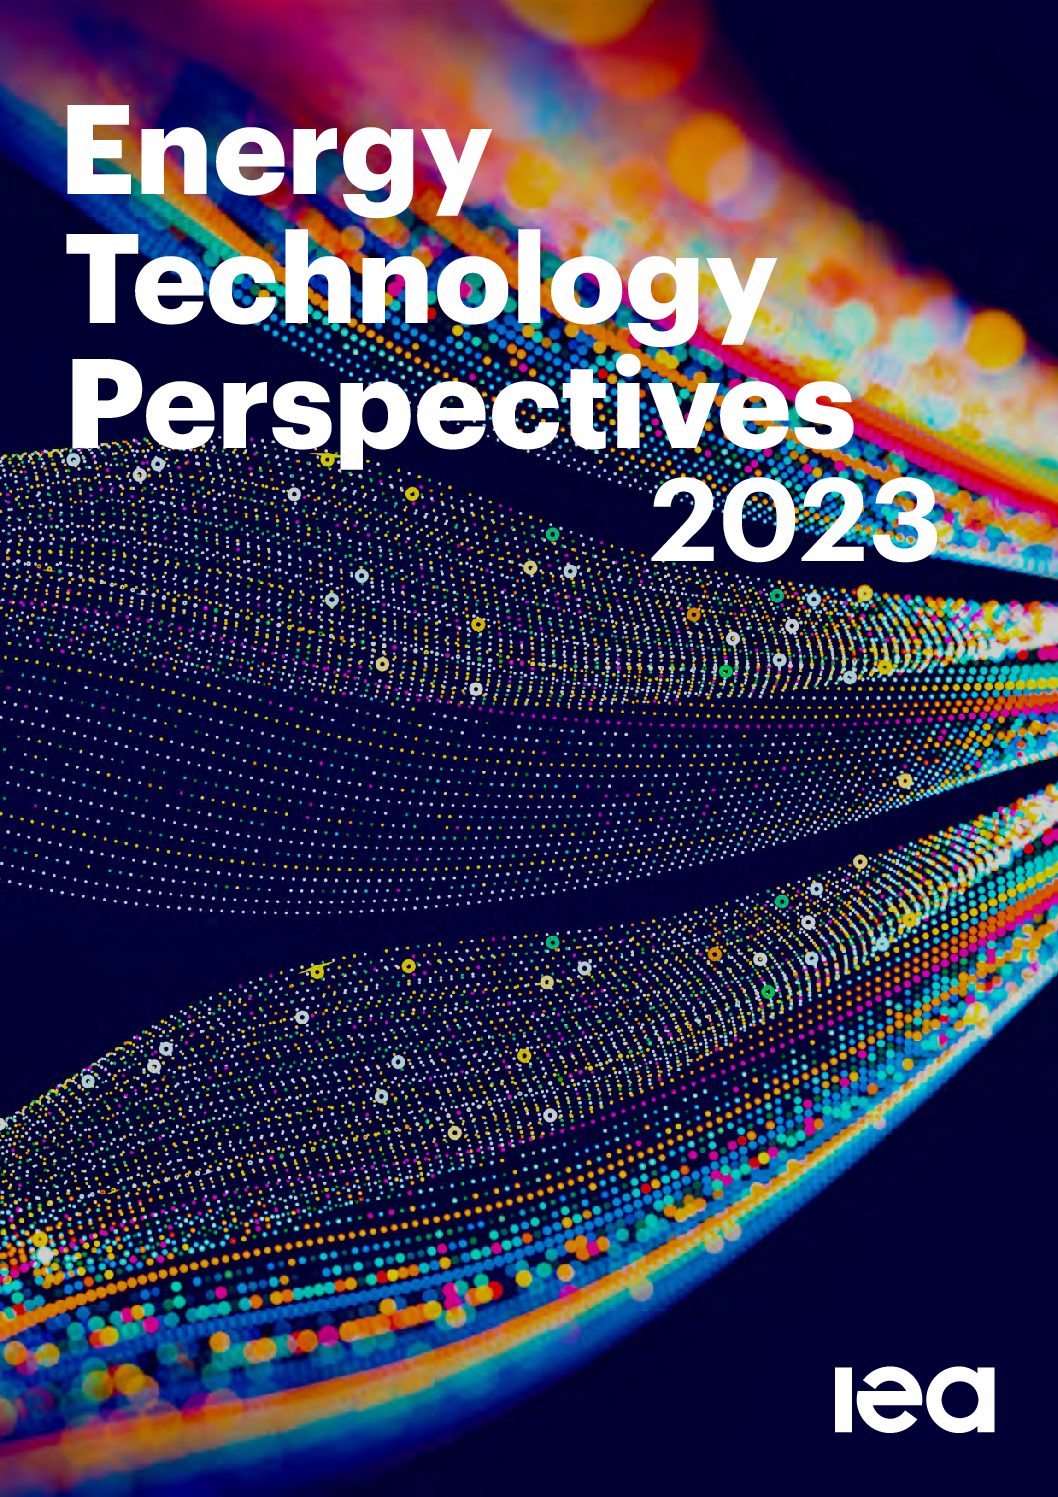 Energy Technology Perspectives 2023 – IEA